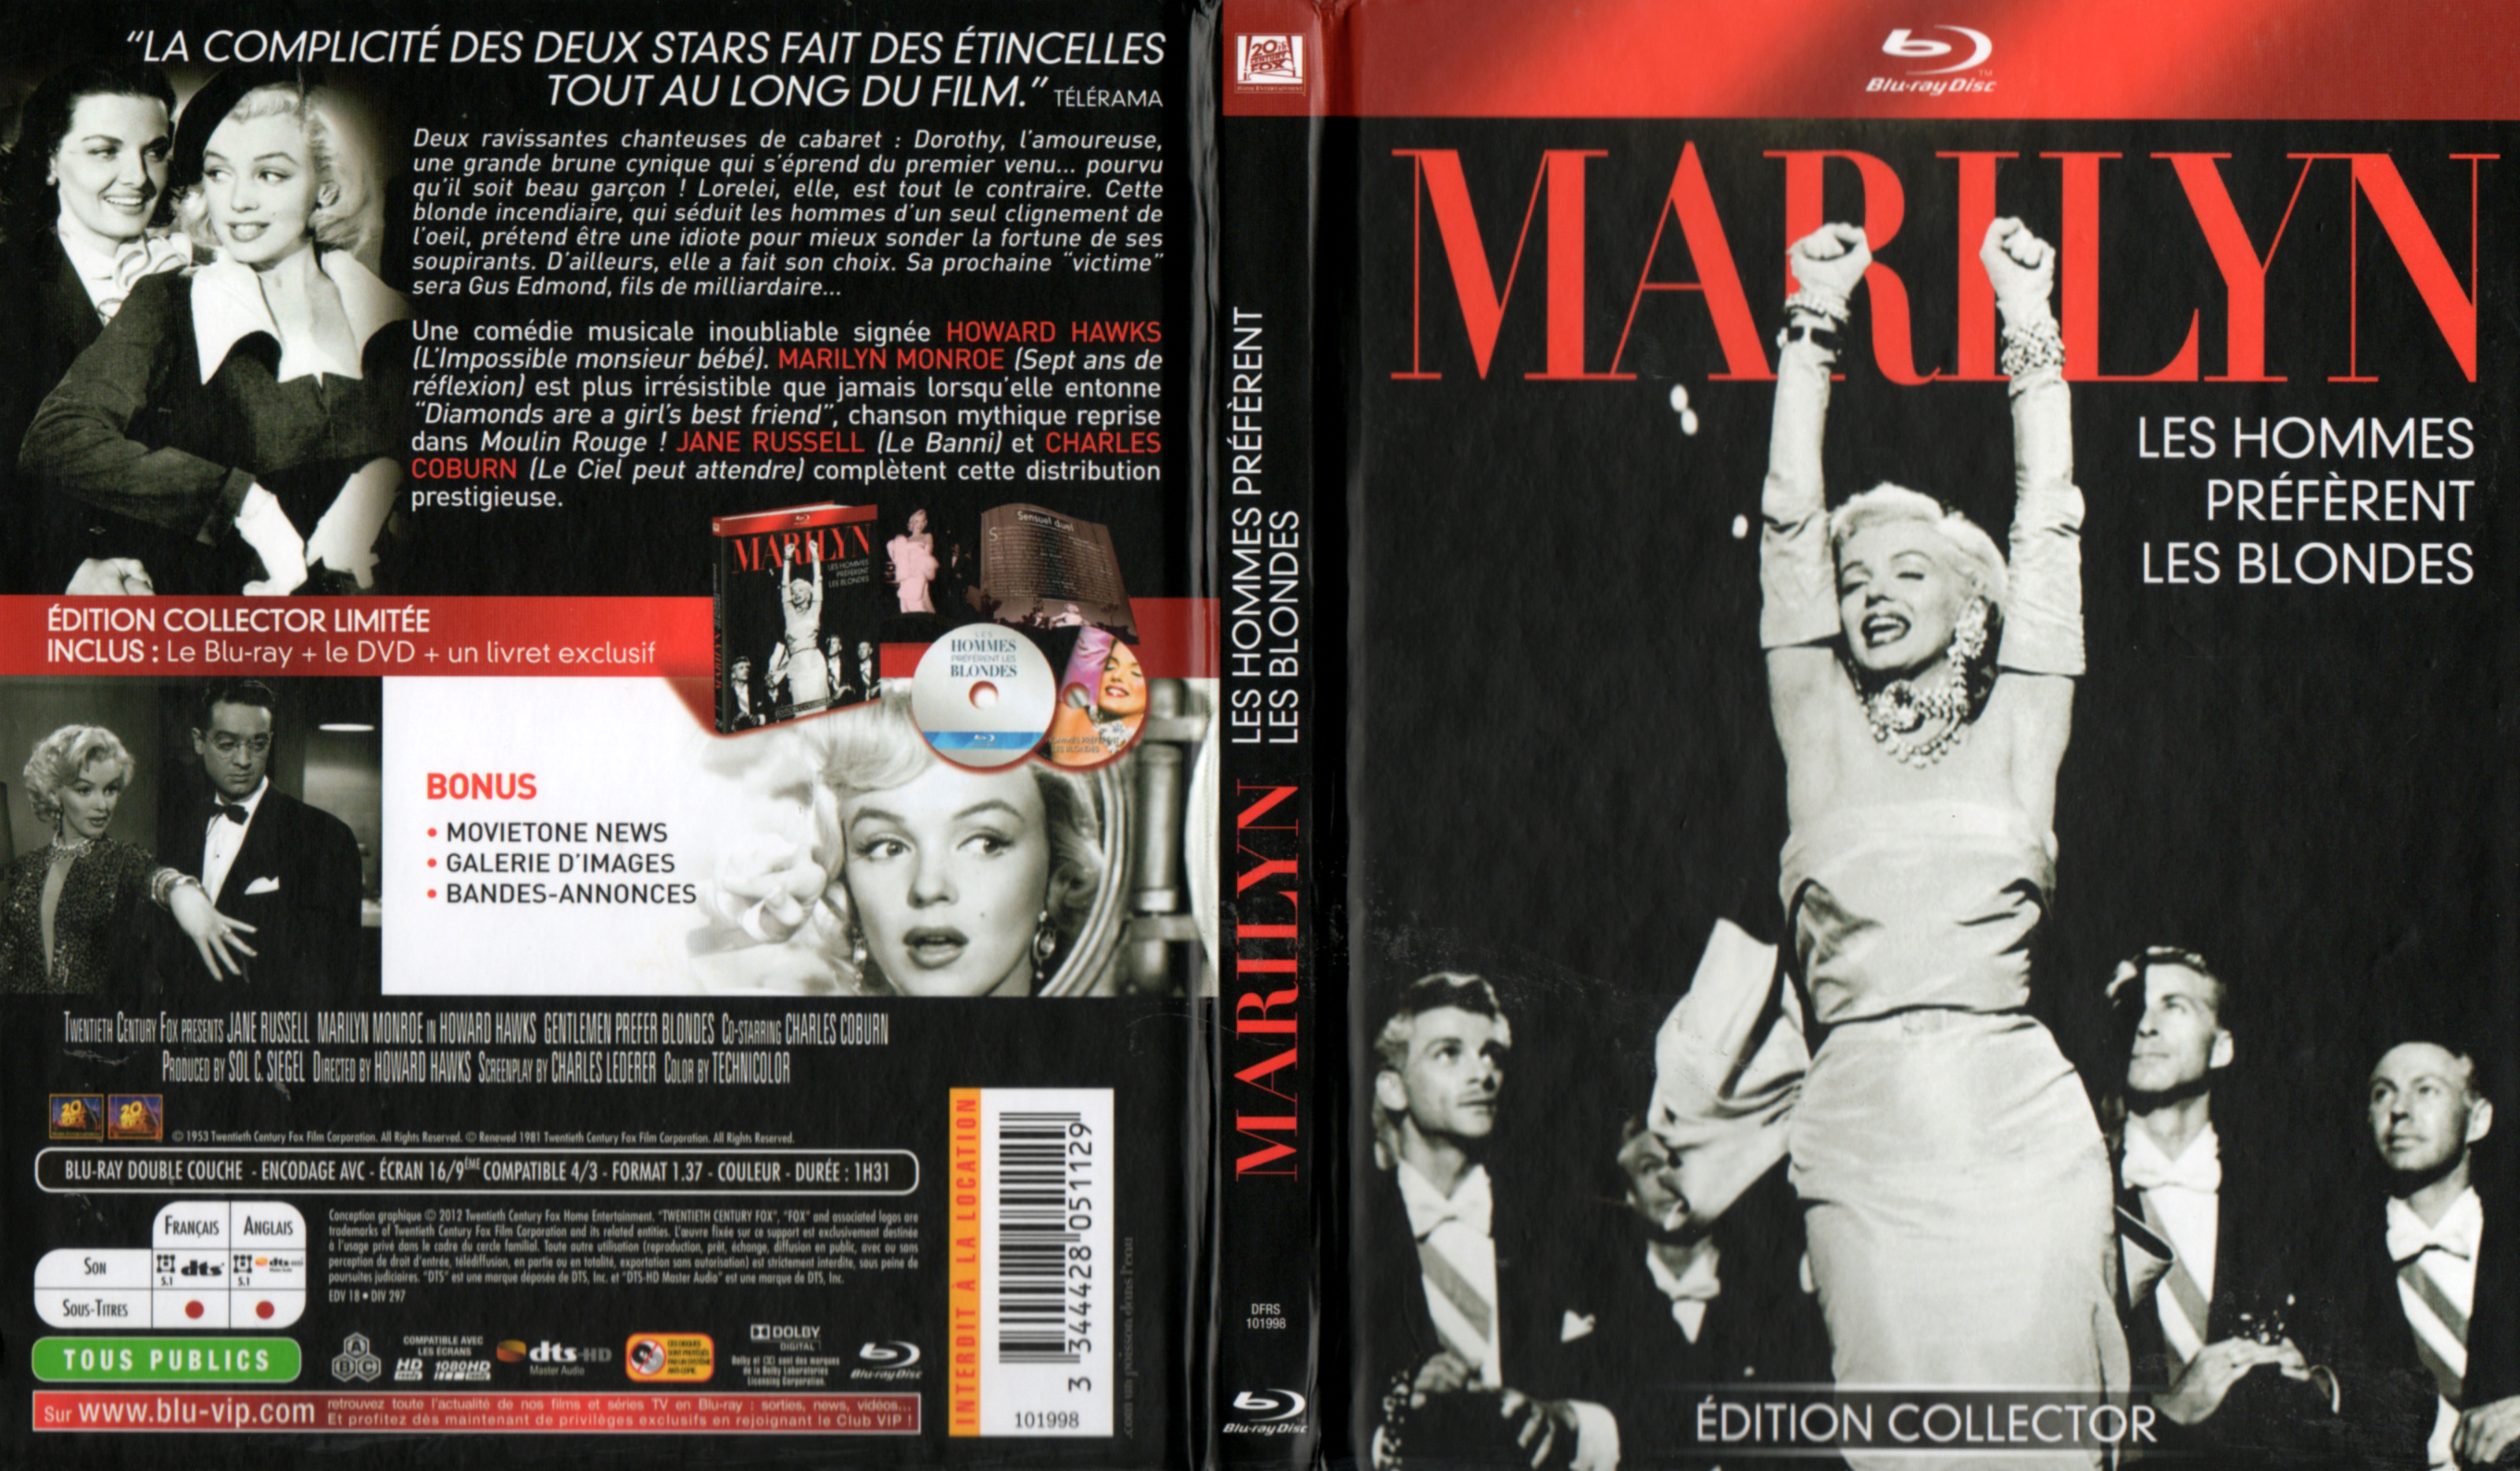 Jaquette DVD Les hommes prfrent les blondes (BLU-RAY) v2